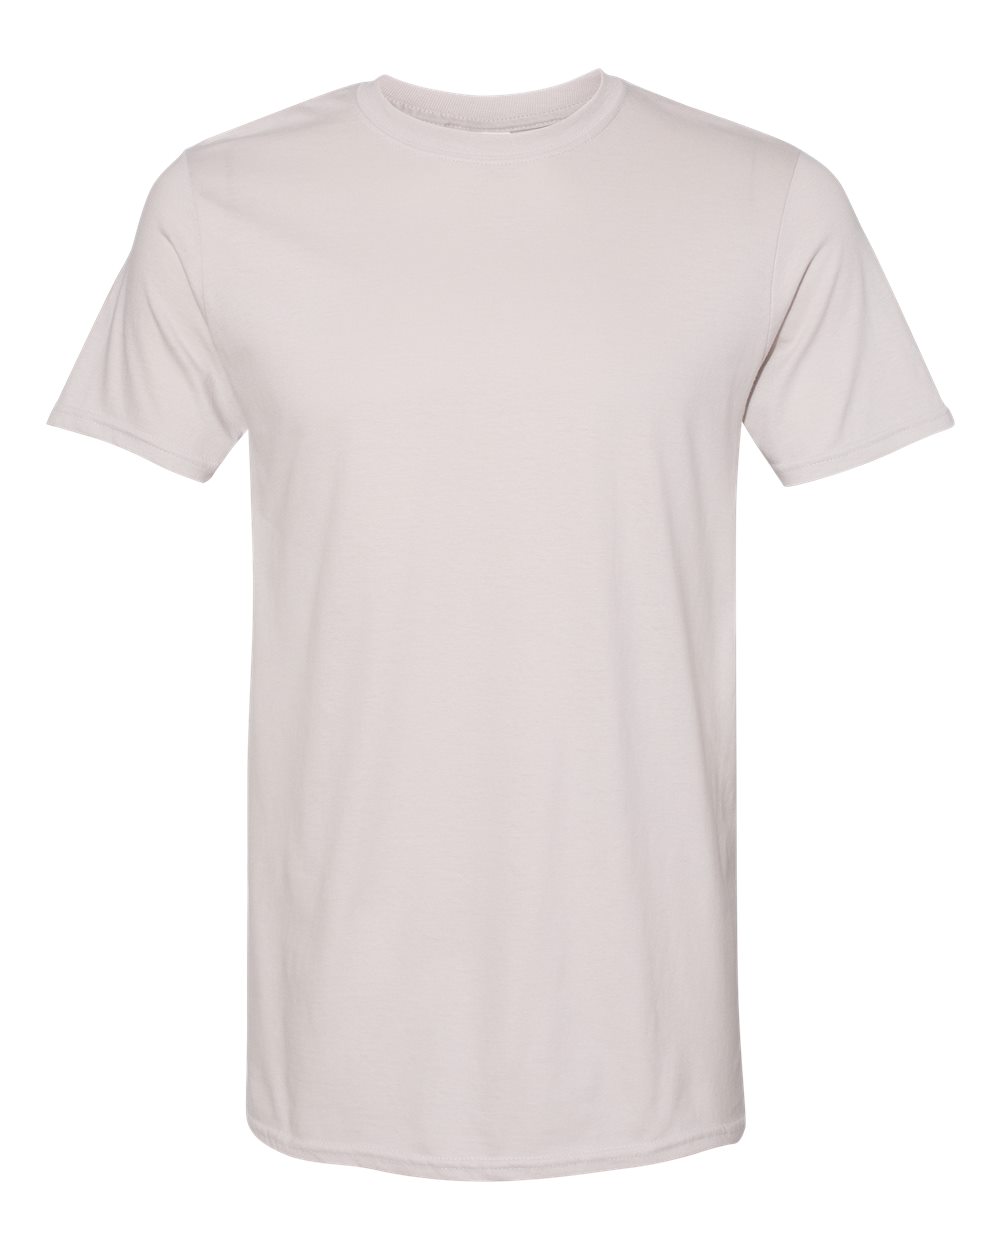 Gildan 64000 - Men's SoftStyle T-Shirt $3.49 - T-Shirts